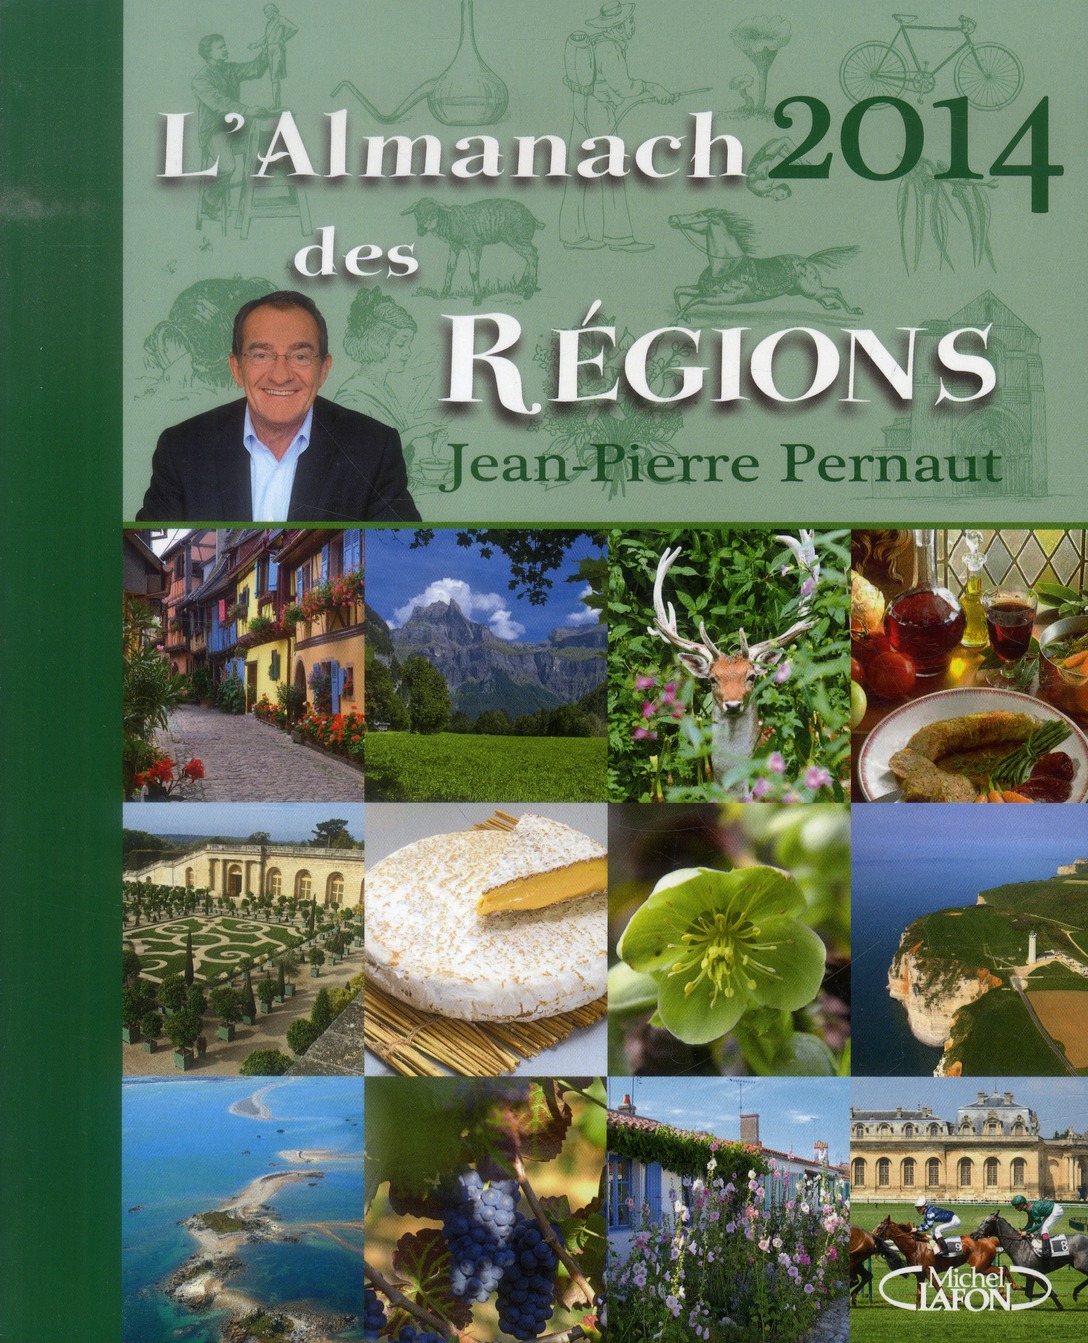 L'ALMANACH DES REGIONS 2014